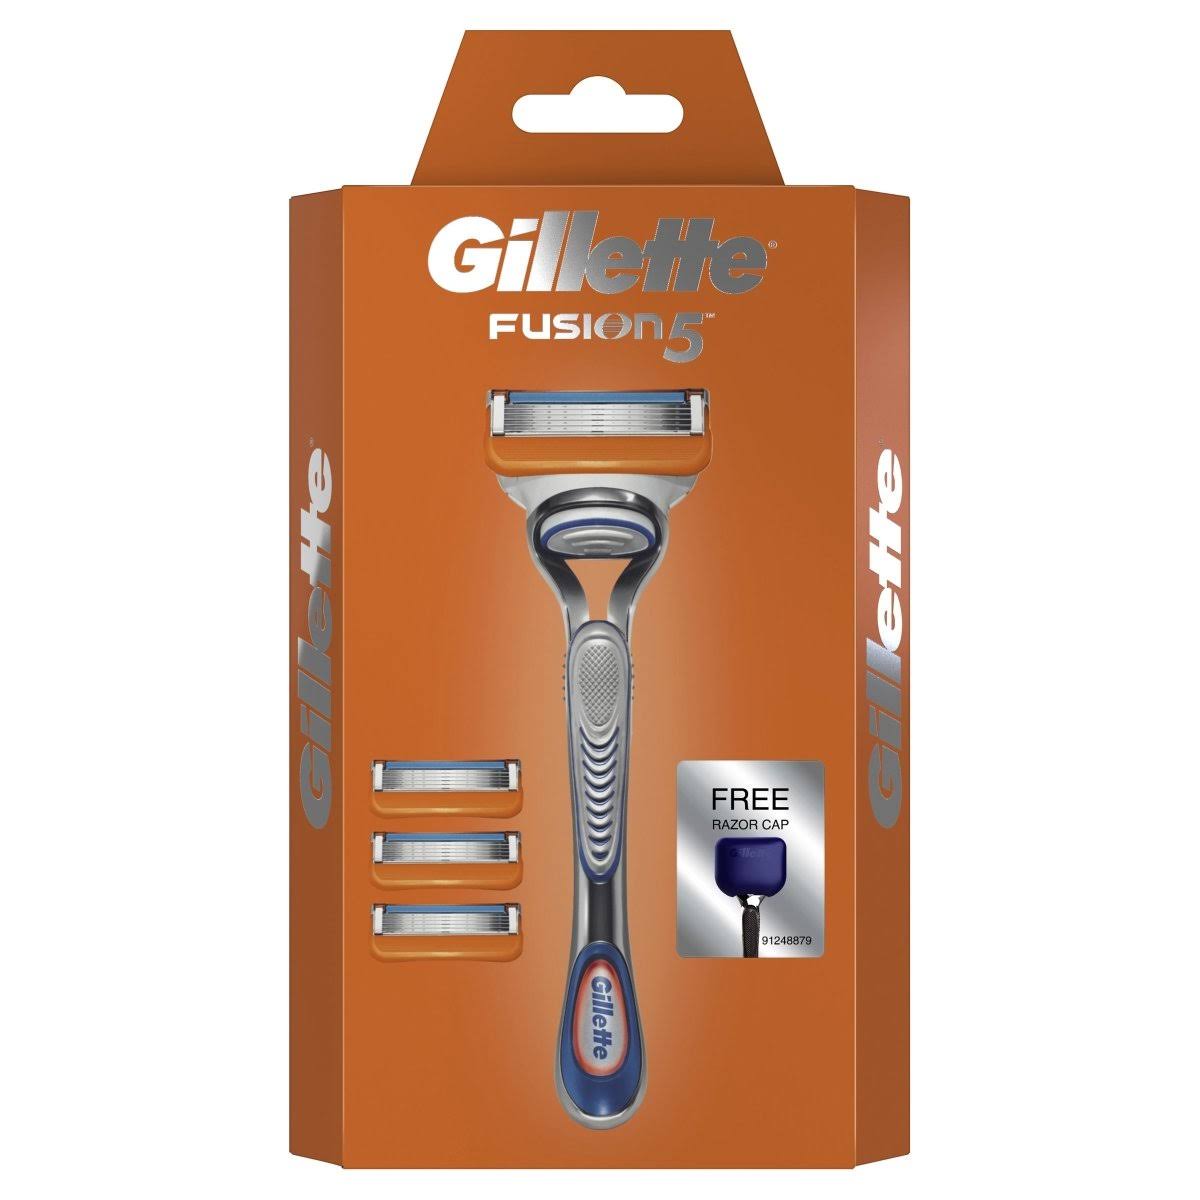 Gillette Men's Fusion 5 Razor Blades Pack - 4pk